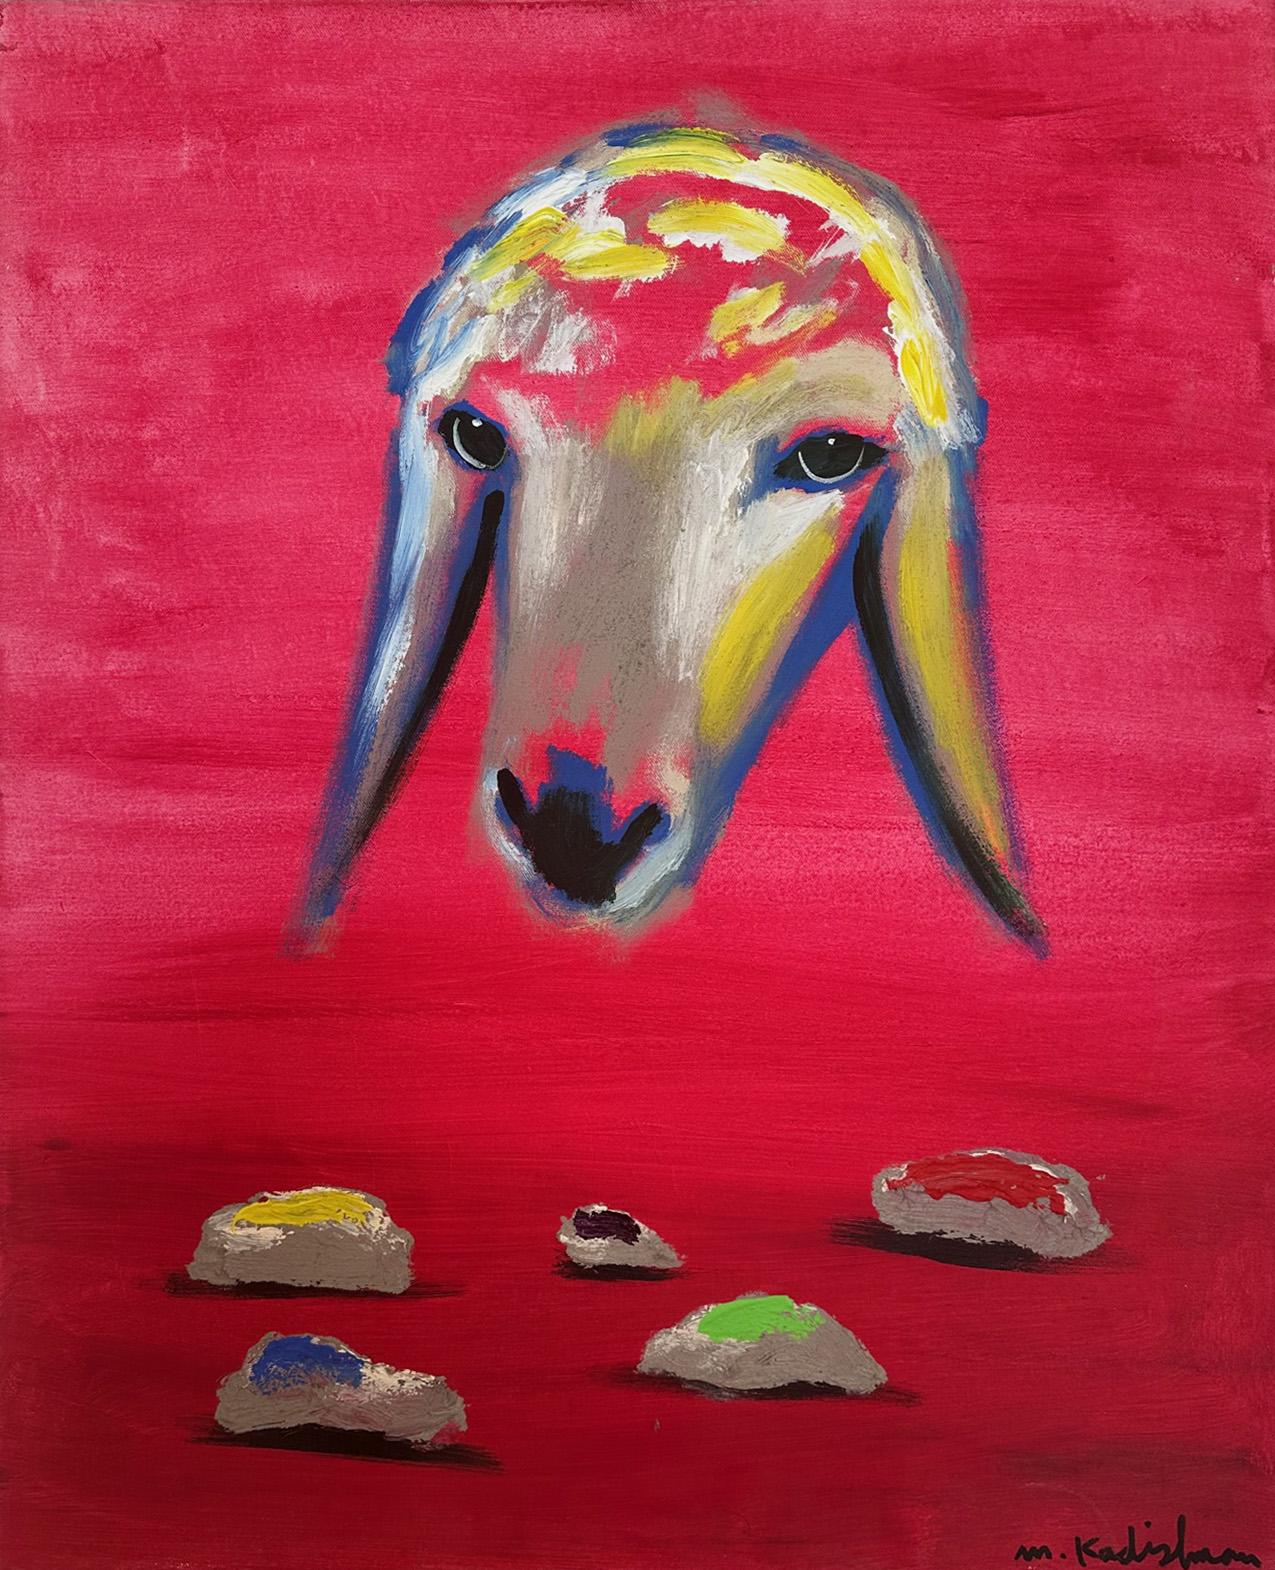 Beautiful painting, colorful and vibrant RED sheep head by Kadishman - Painting by Menashe Kadishman